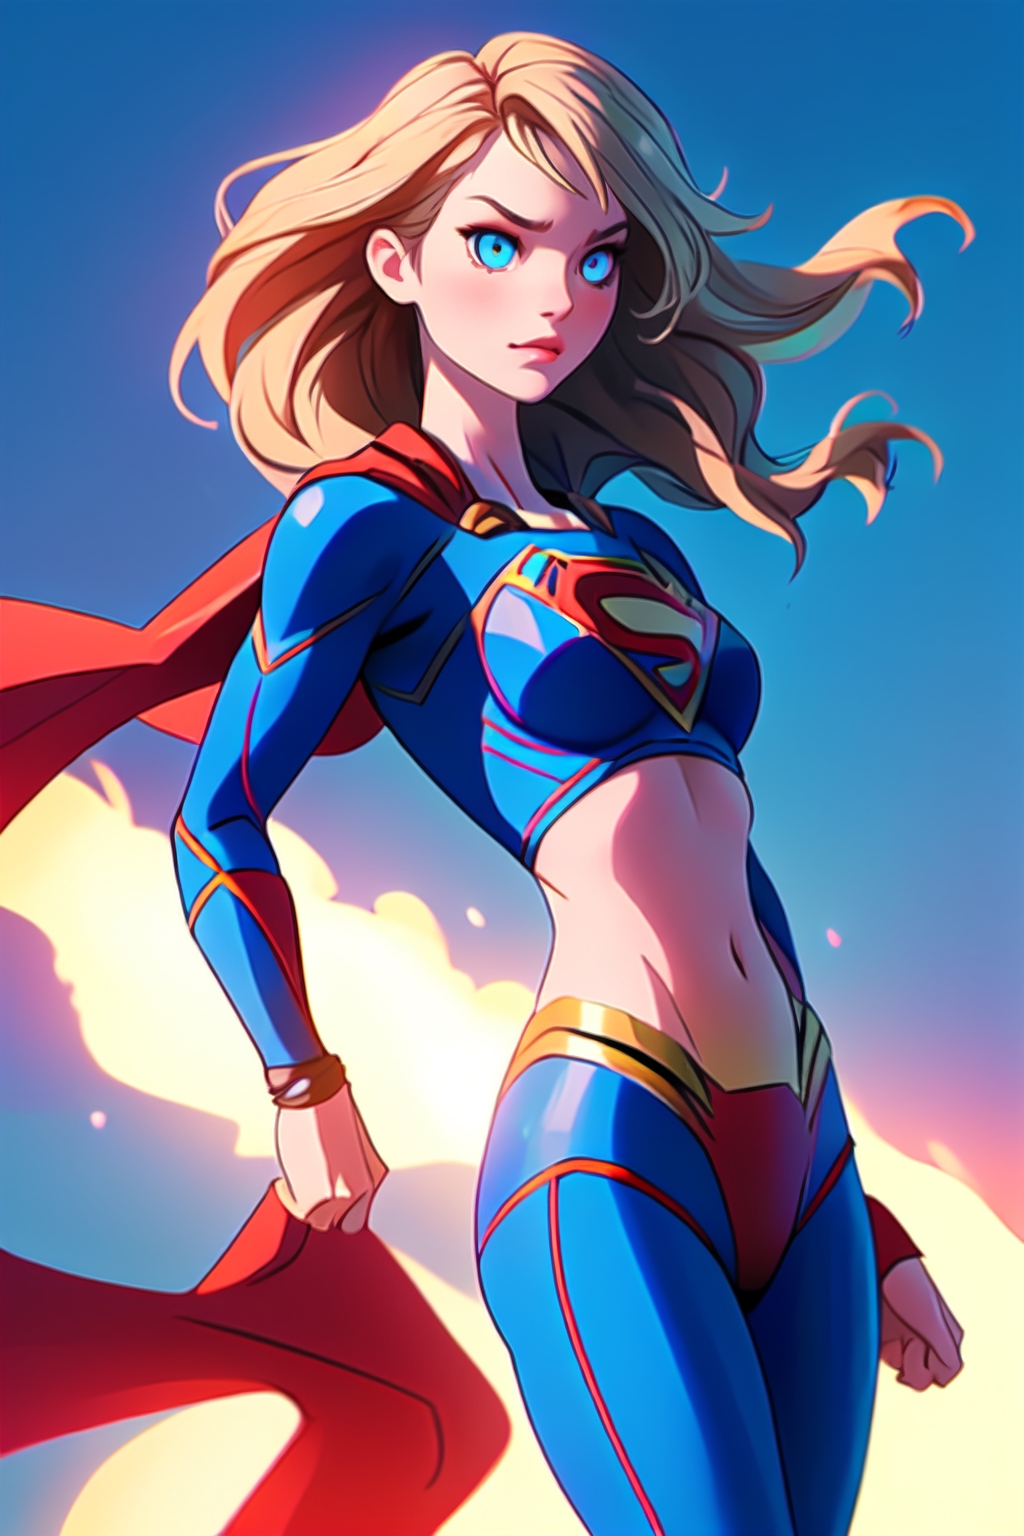 Anime Supergirl Jreg777 - Illustrations ART street